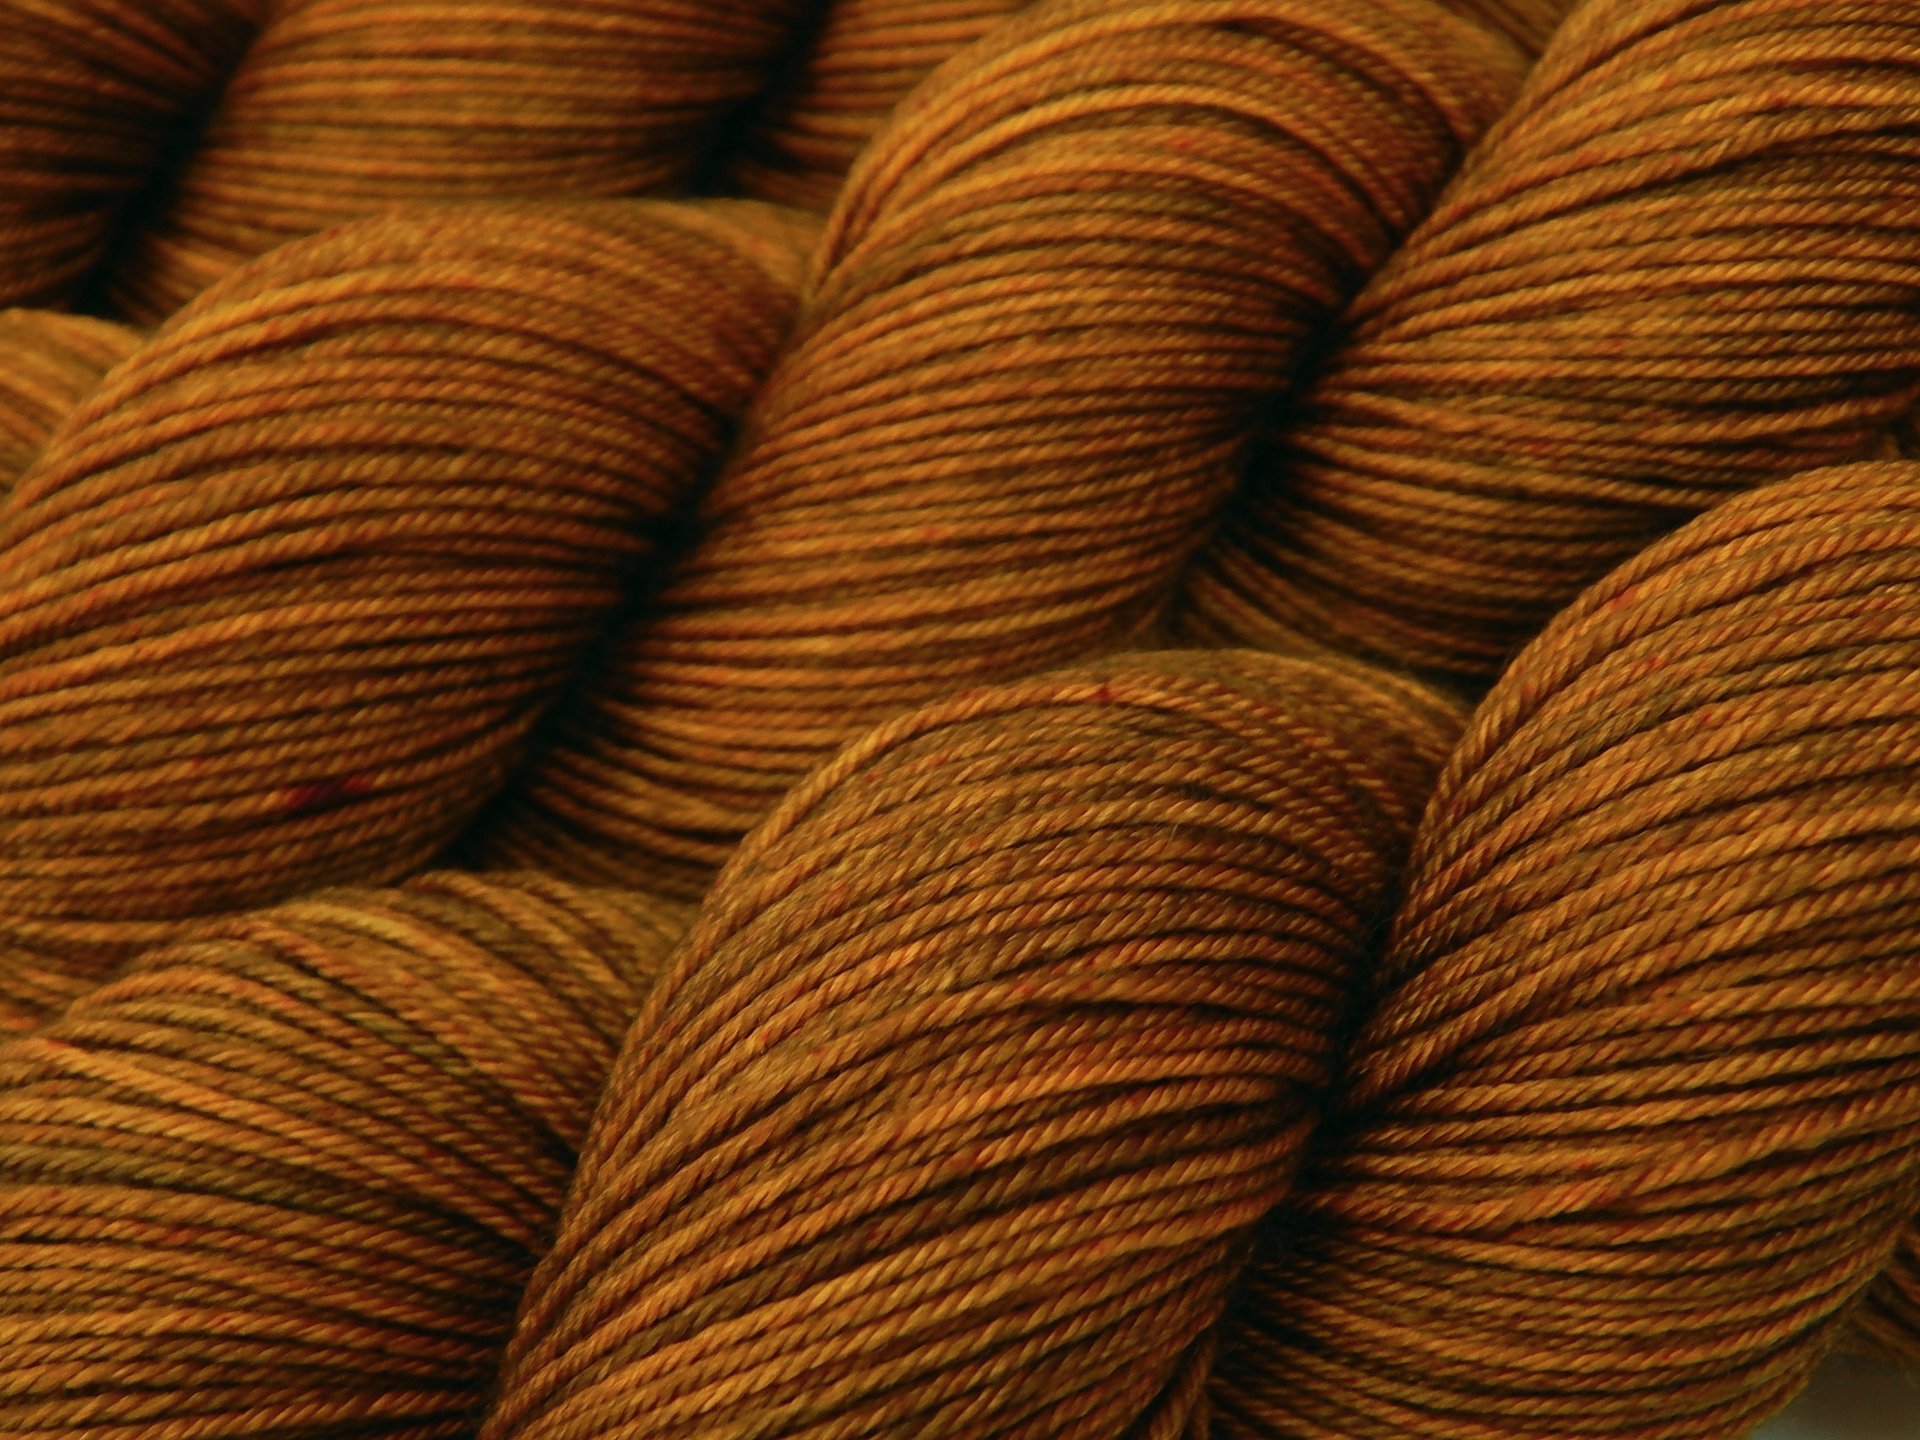 Hand Dyed Yarn, Sock Fingering Weight 4 Ply Superwash Merino Wool - Hazelnut - Indie Knitting Yarn, Warm Brown Tonal Handdyed Sock Yarn